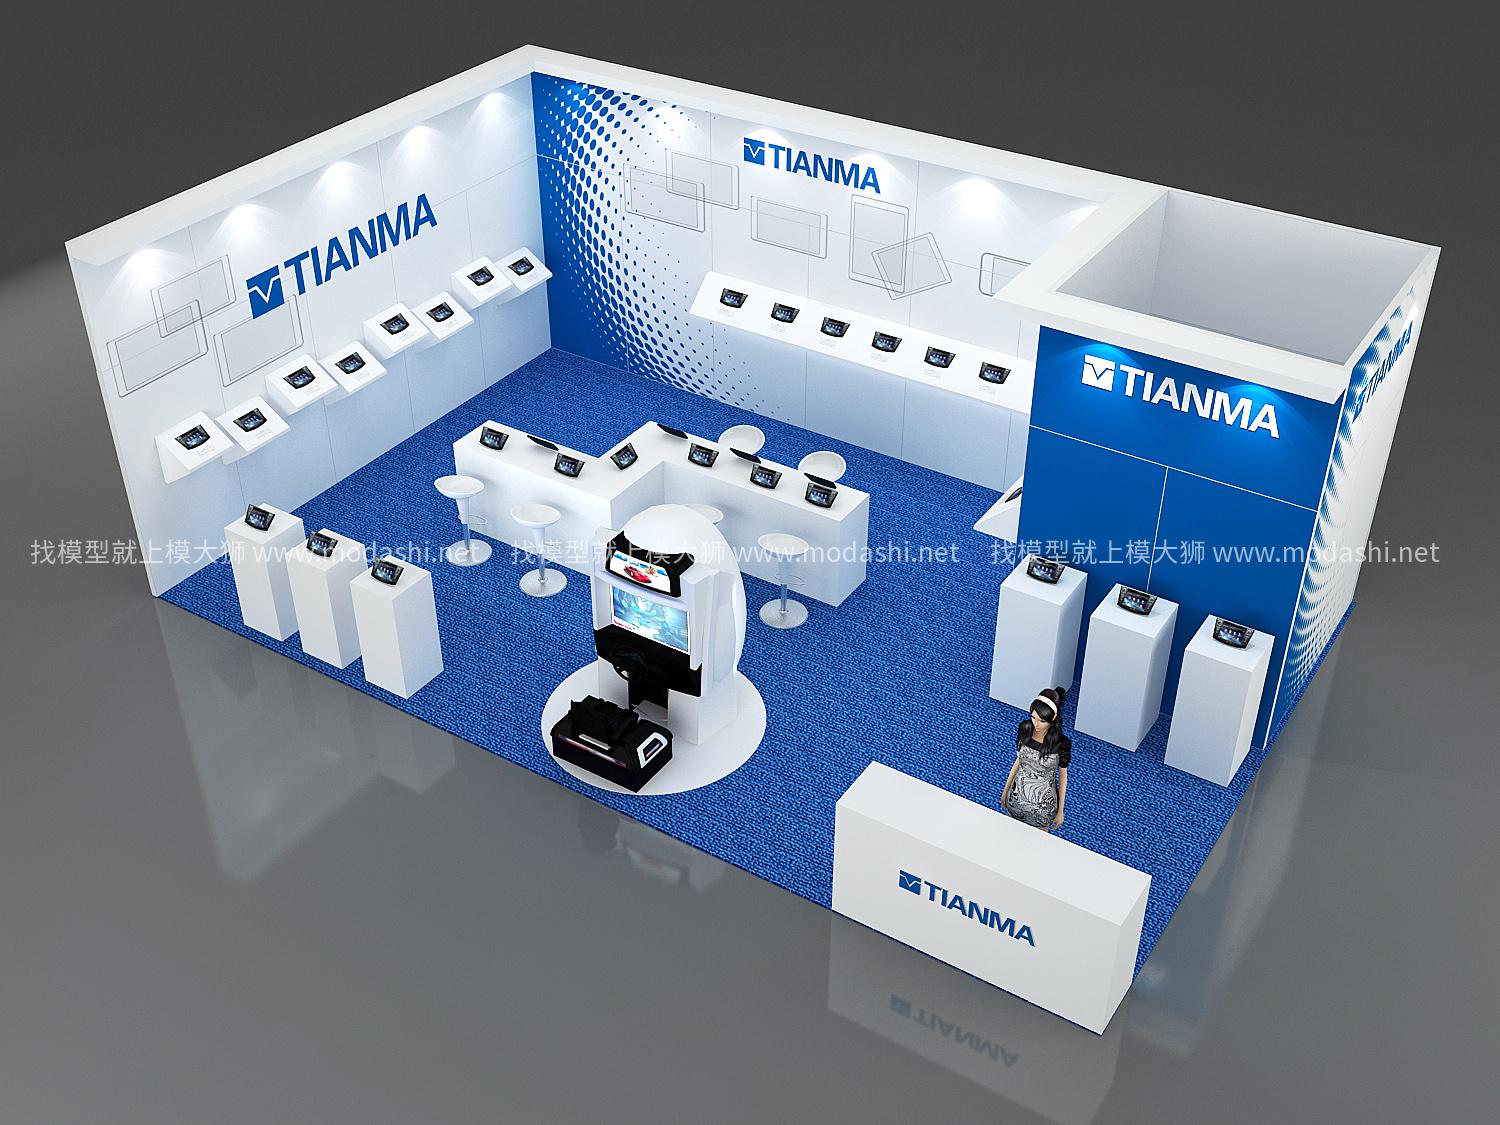 TIANMA展台模型设计